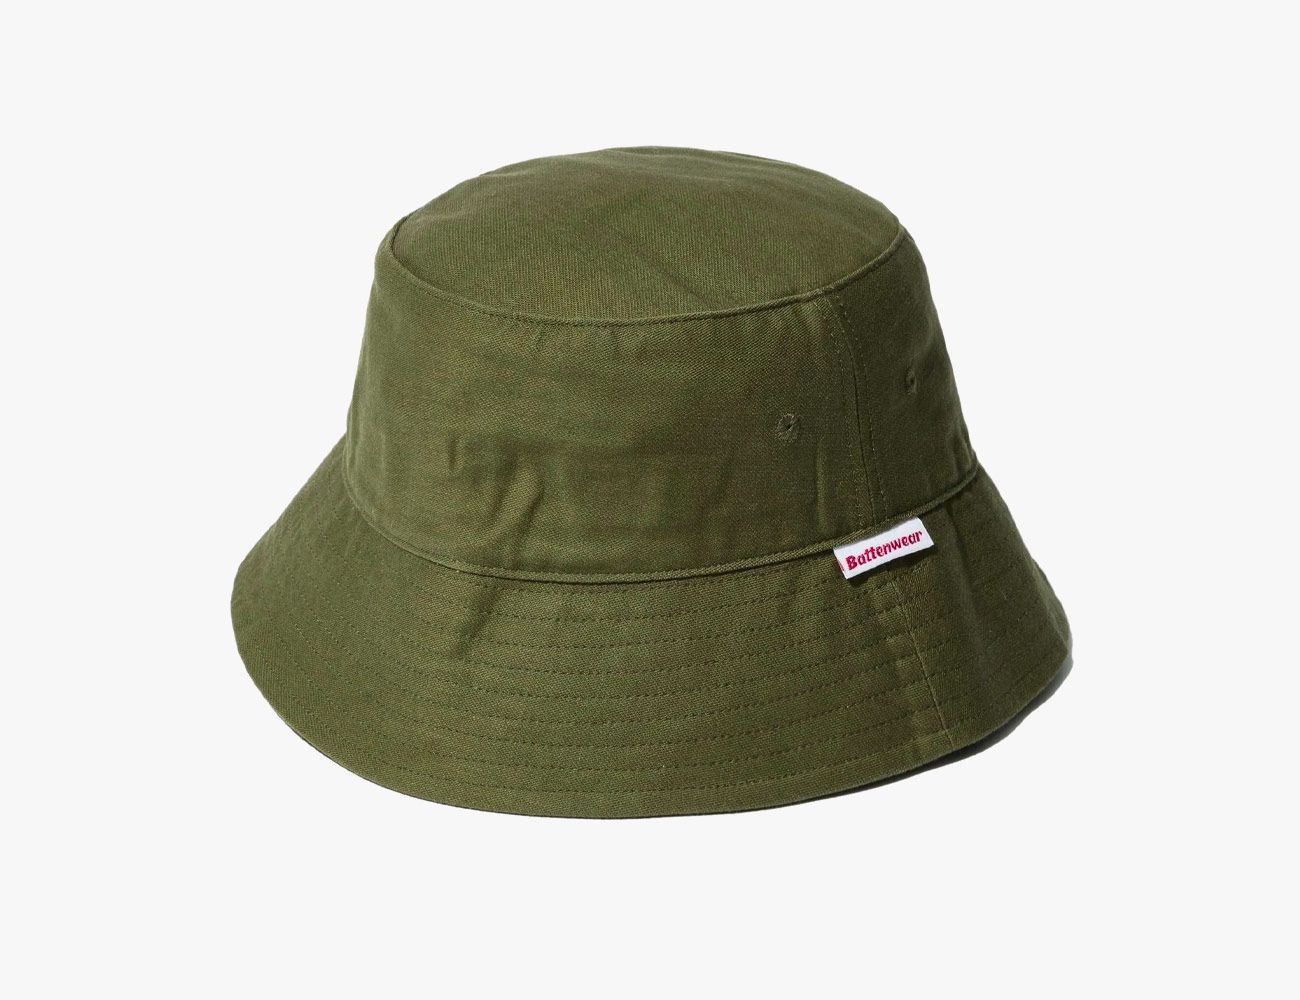 13 Stylish Bucket Hats to Wear This Summer